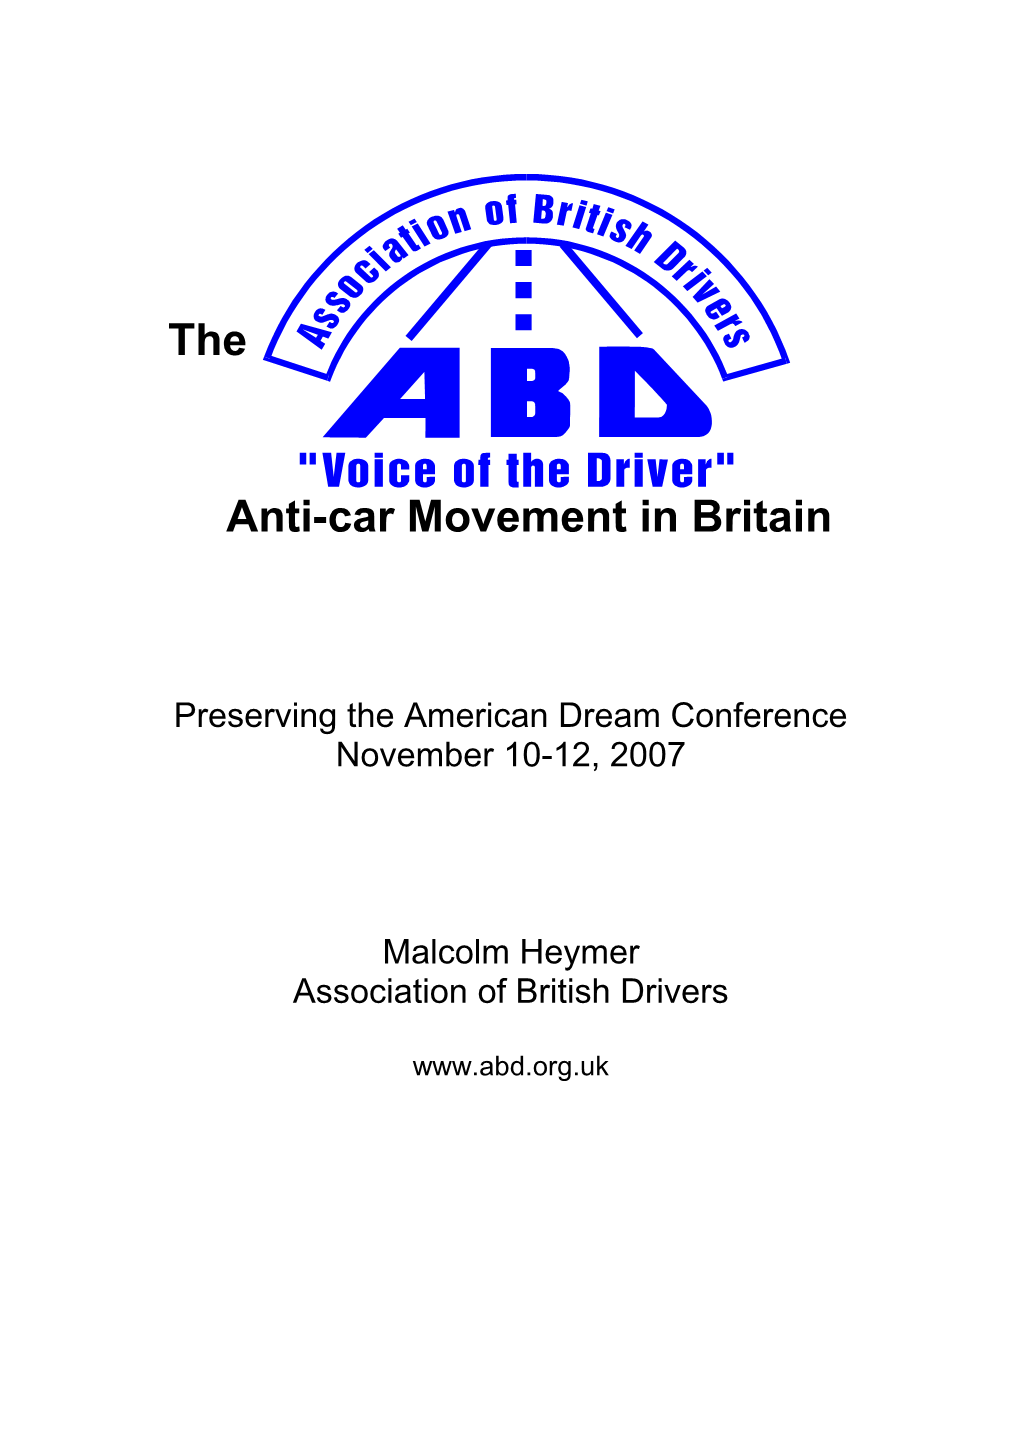 The Anti-Car Movement in Britain